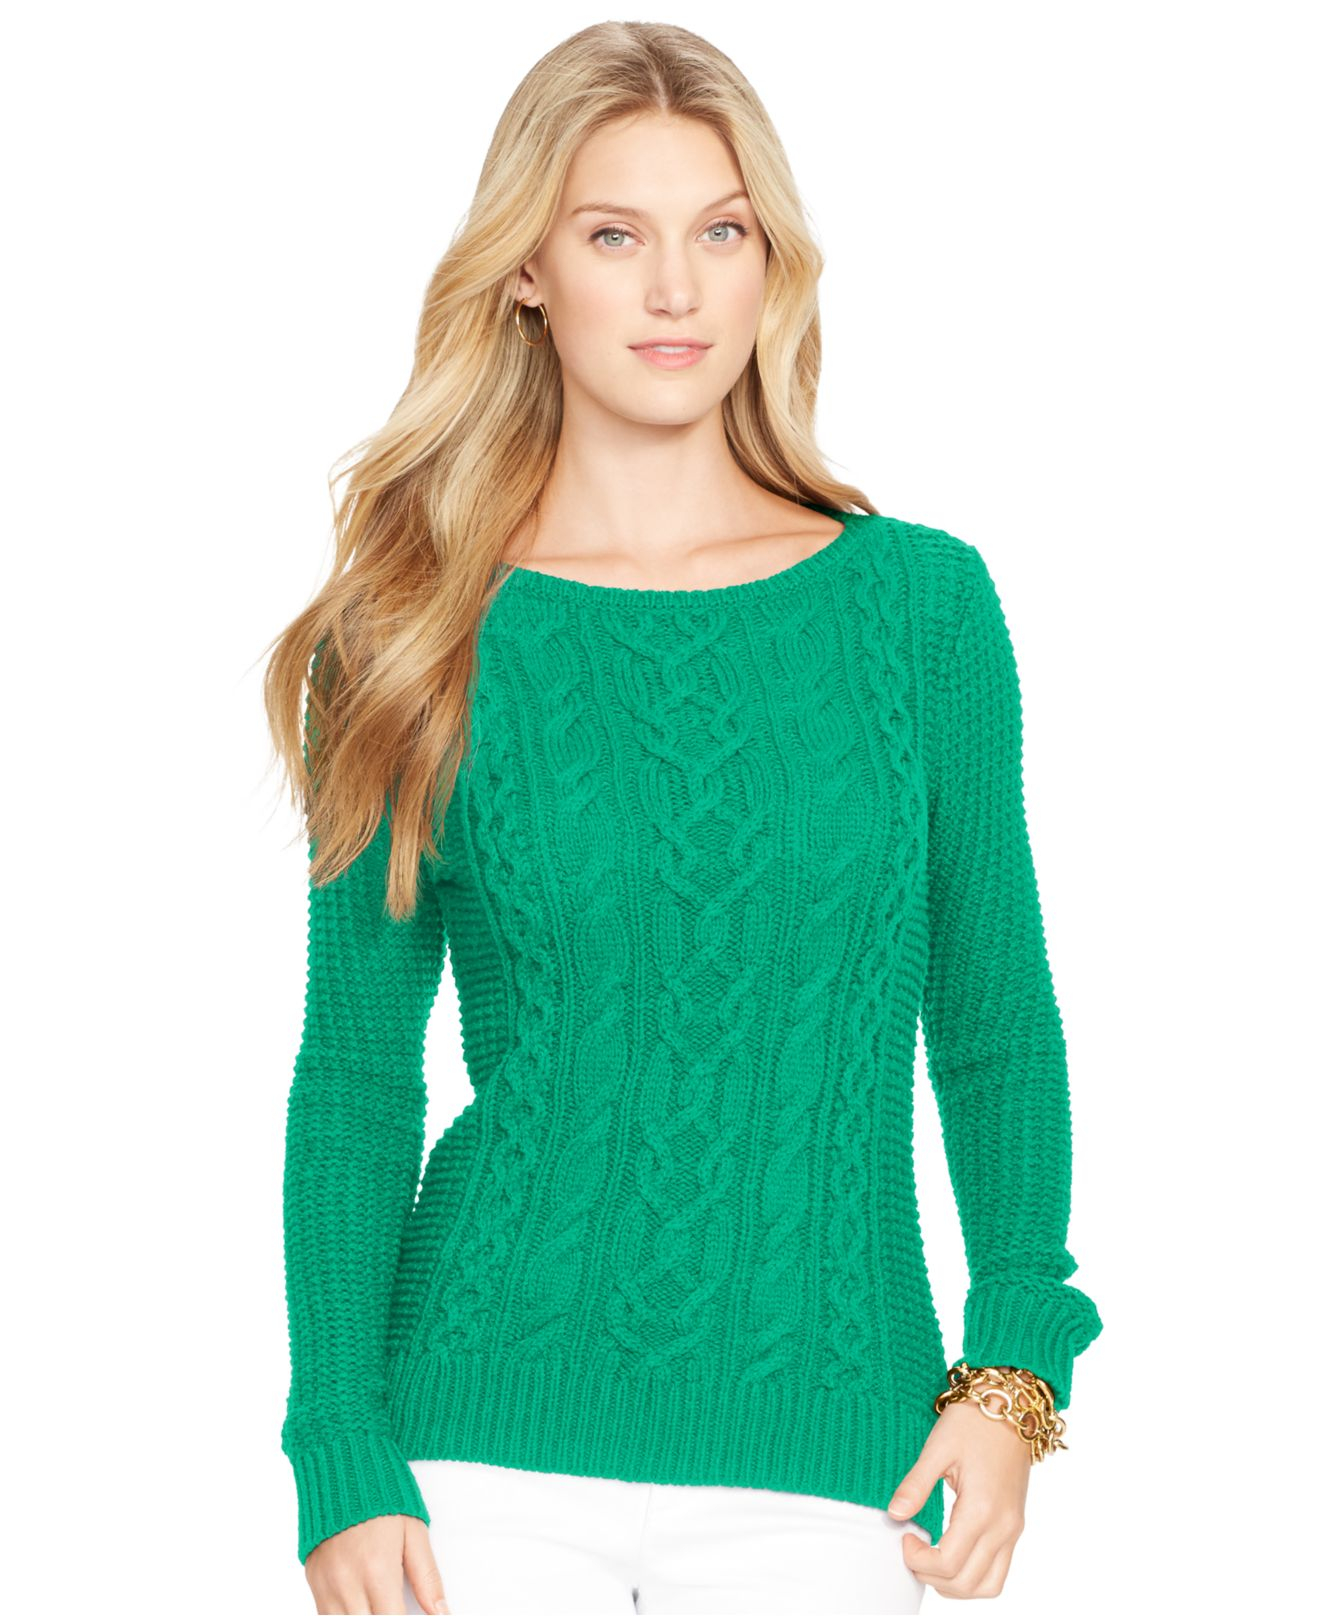 Lyst - Lauren by Ralph Lauren Boat-Neck Cable-Knit Sweater in Green